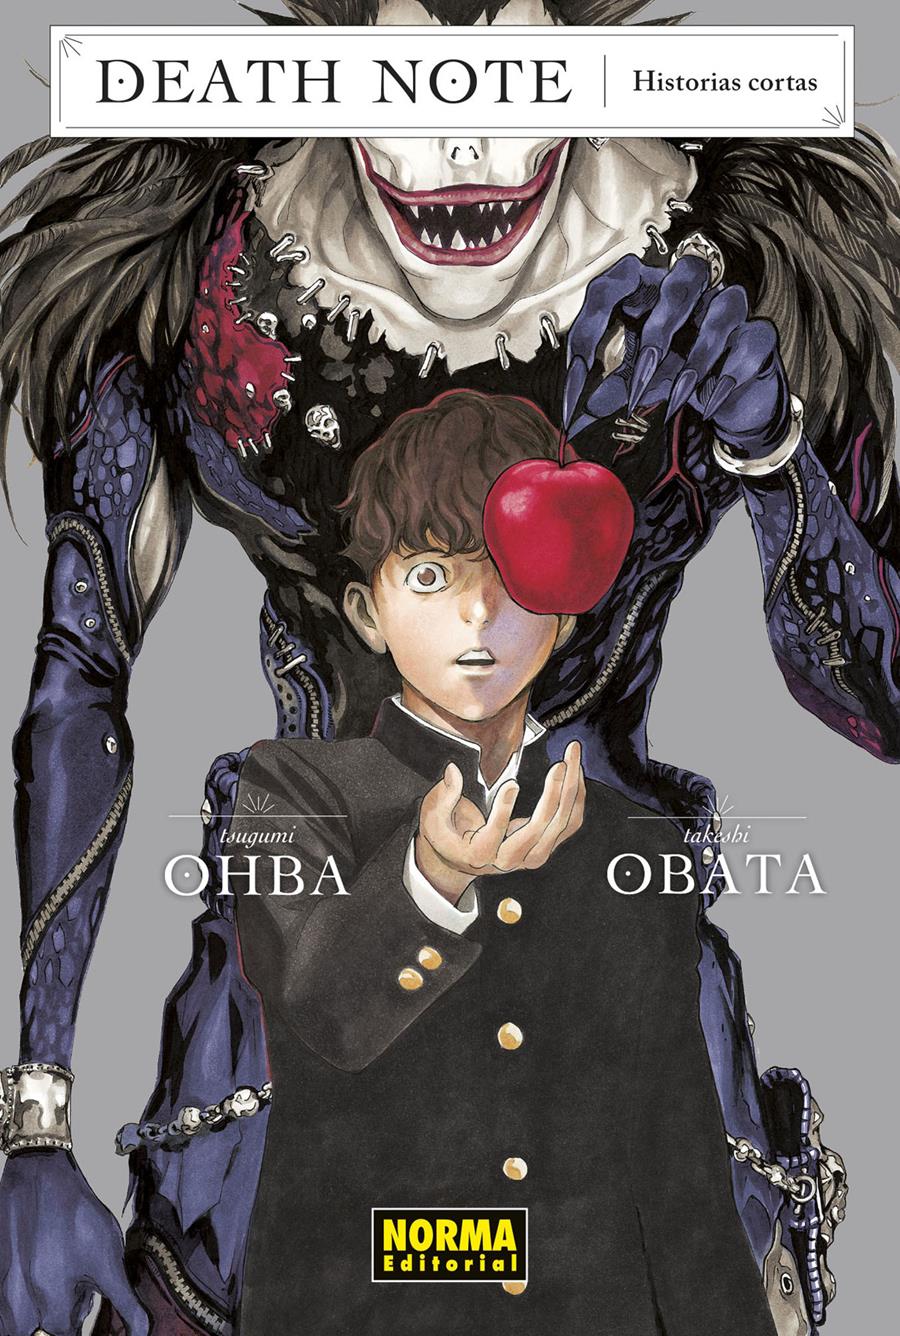 Death Note historias cortas | N1021-NOR20 | Tsugumi Ohba, Takeshi Obata | Terra de Còmic - Tu tienda de cómics online especializada en cómics, manga y merchandising